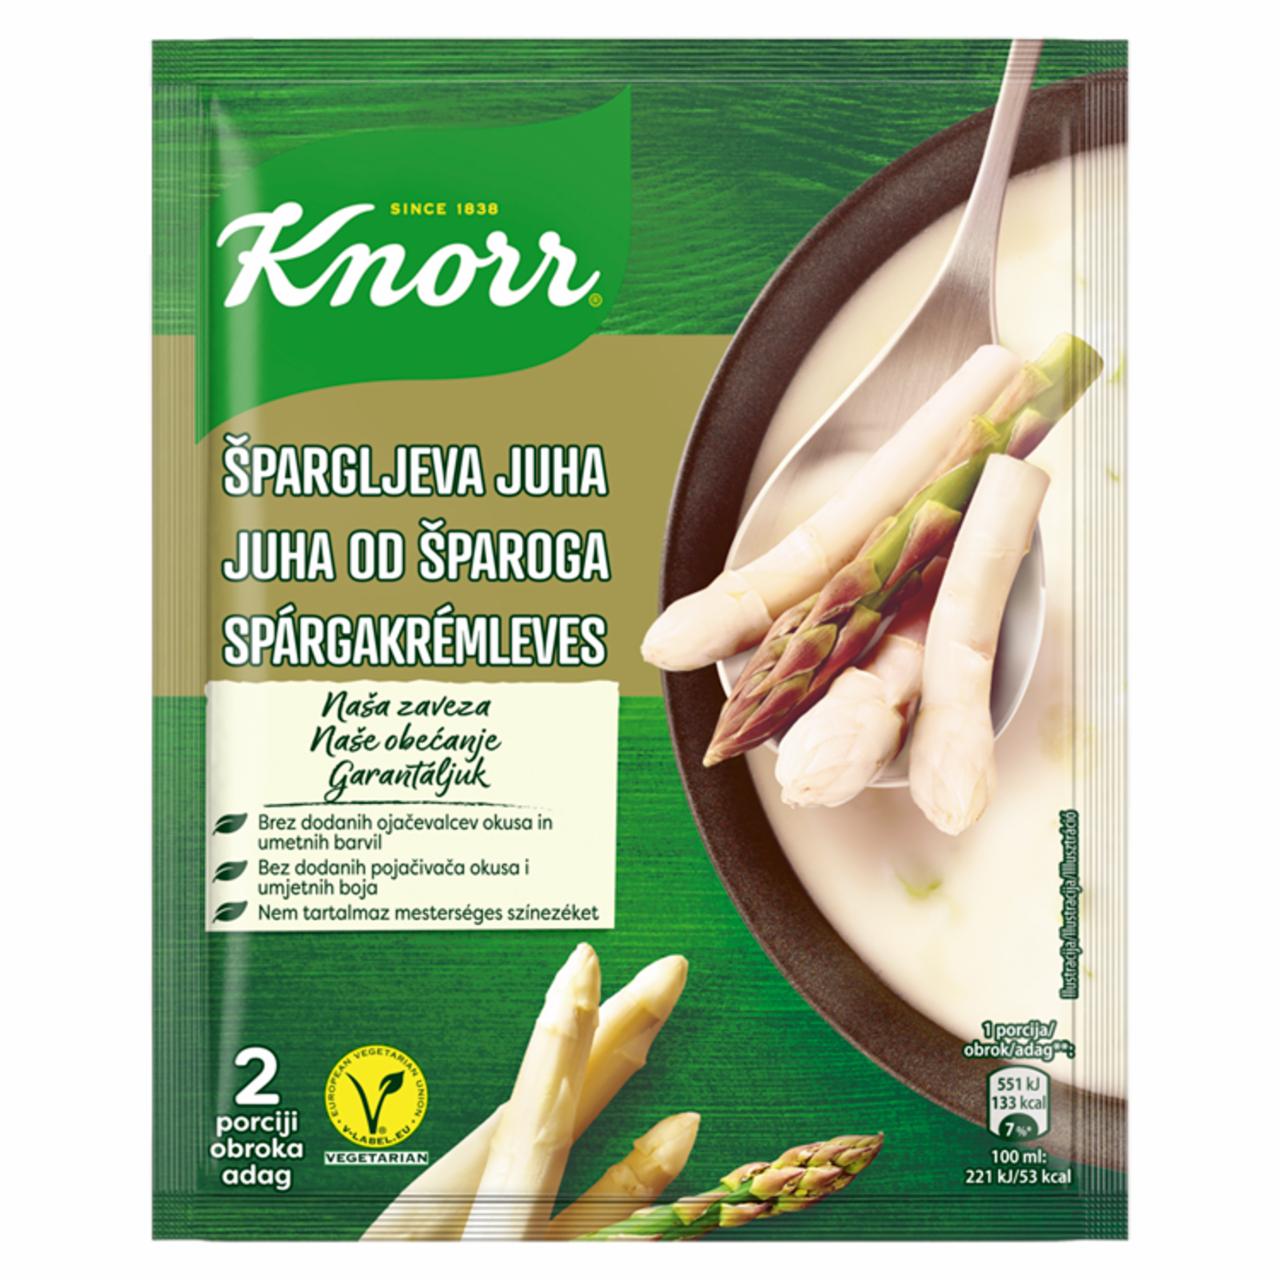 Képek - Knorr spárgakrémleves 55 g